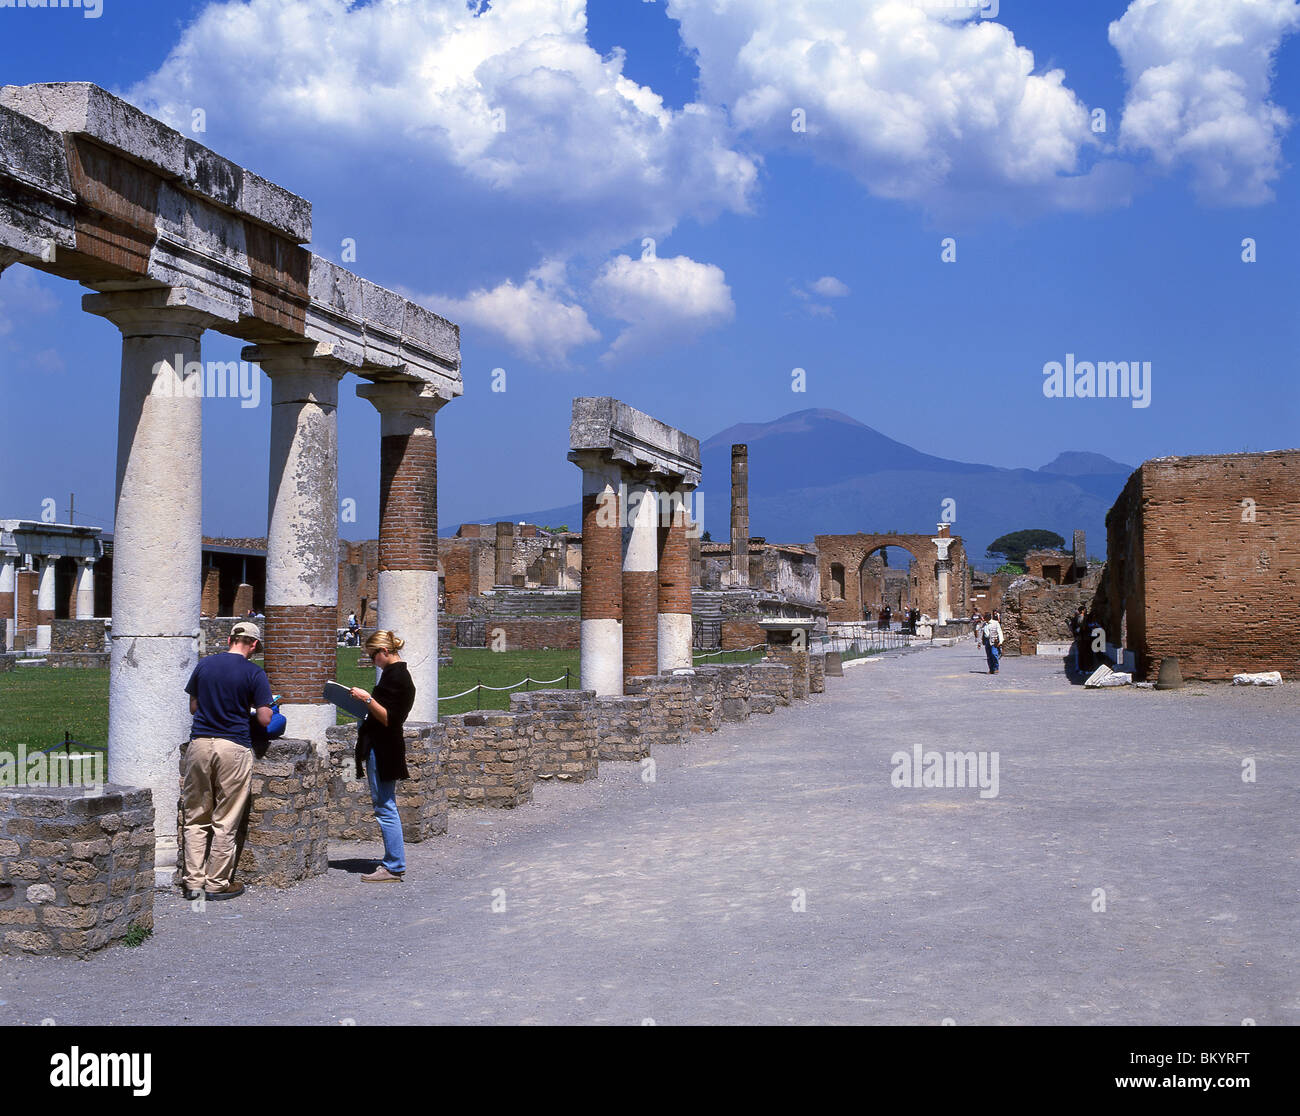 Das Forum mit dem Vesuv in der Ferne, die antike Stadt Pompeji, Pompeji, die Metropolstadt Neapel, die Region Kampanien, Italien Stockfoto